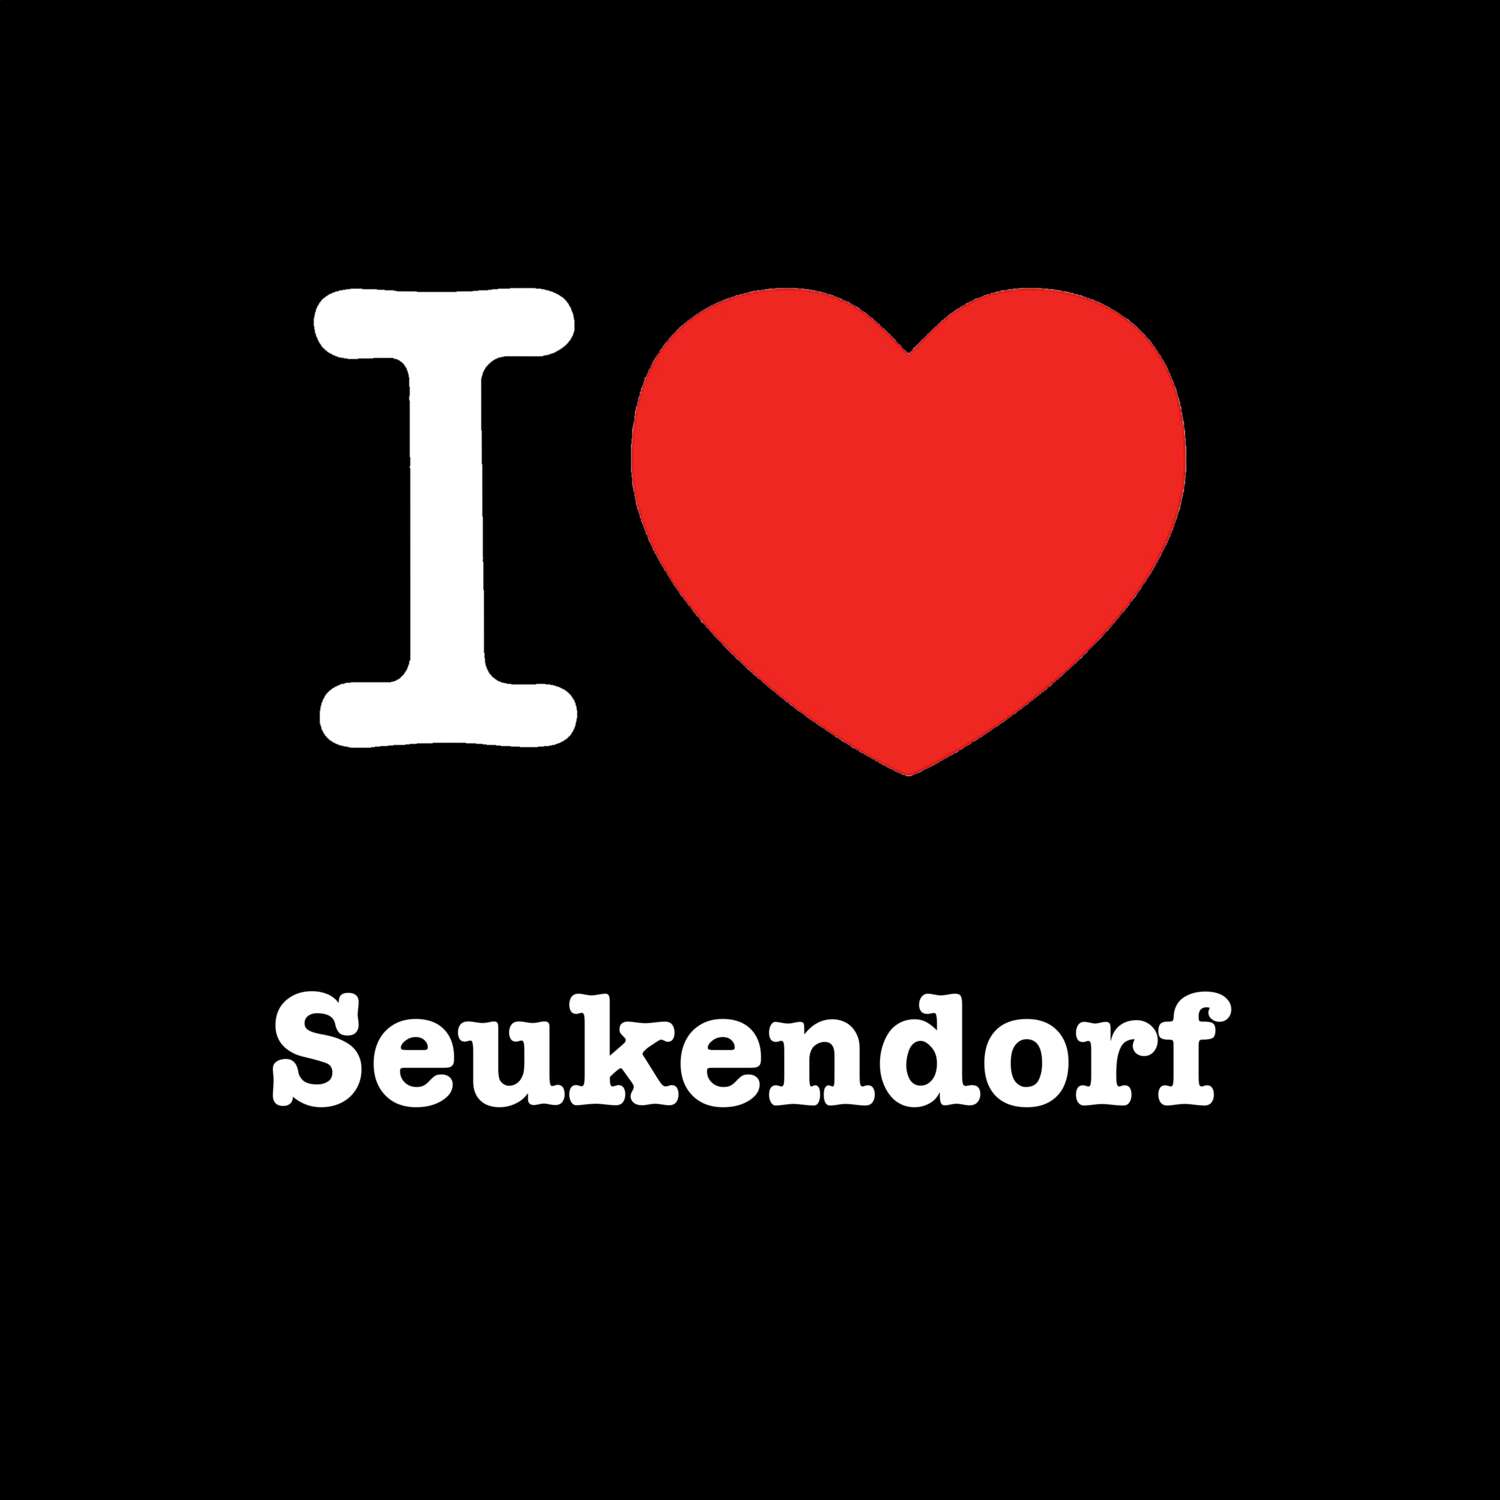 Seukendorf T-Shirt »I love«